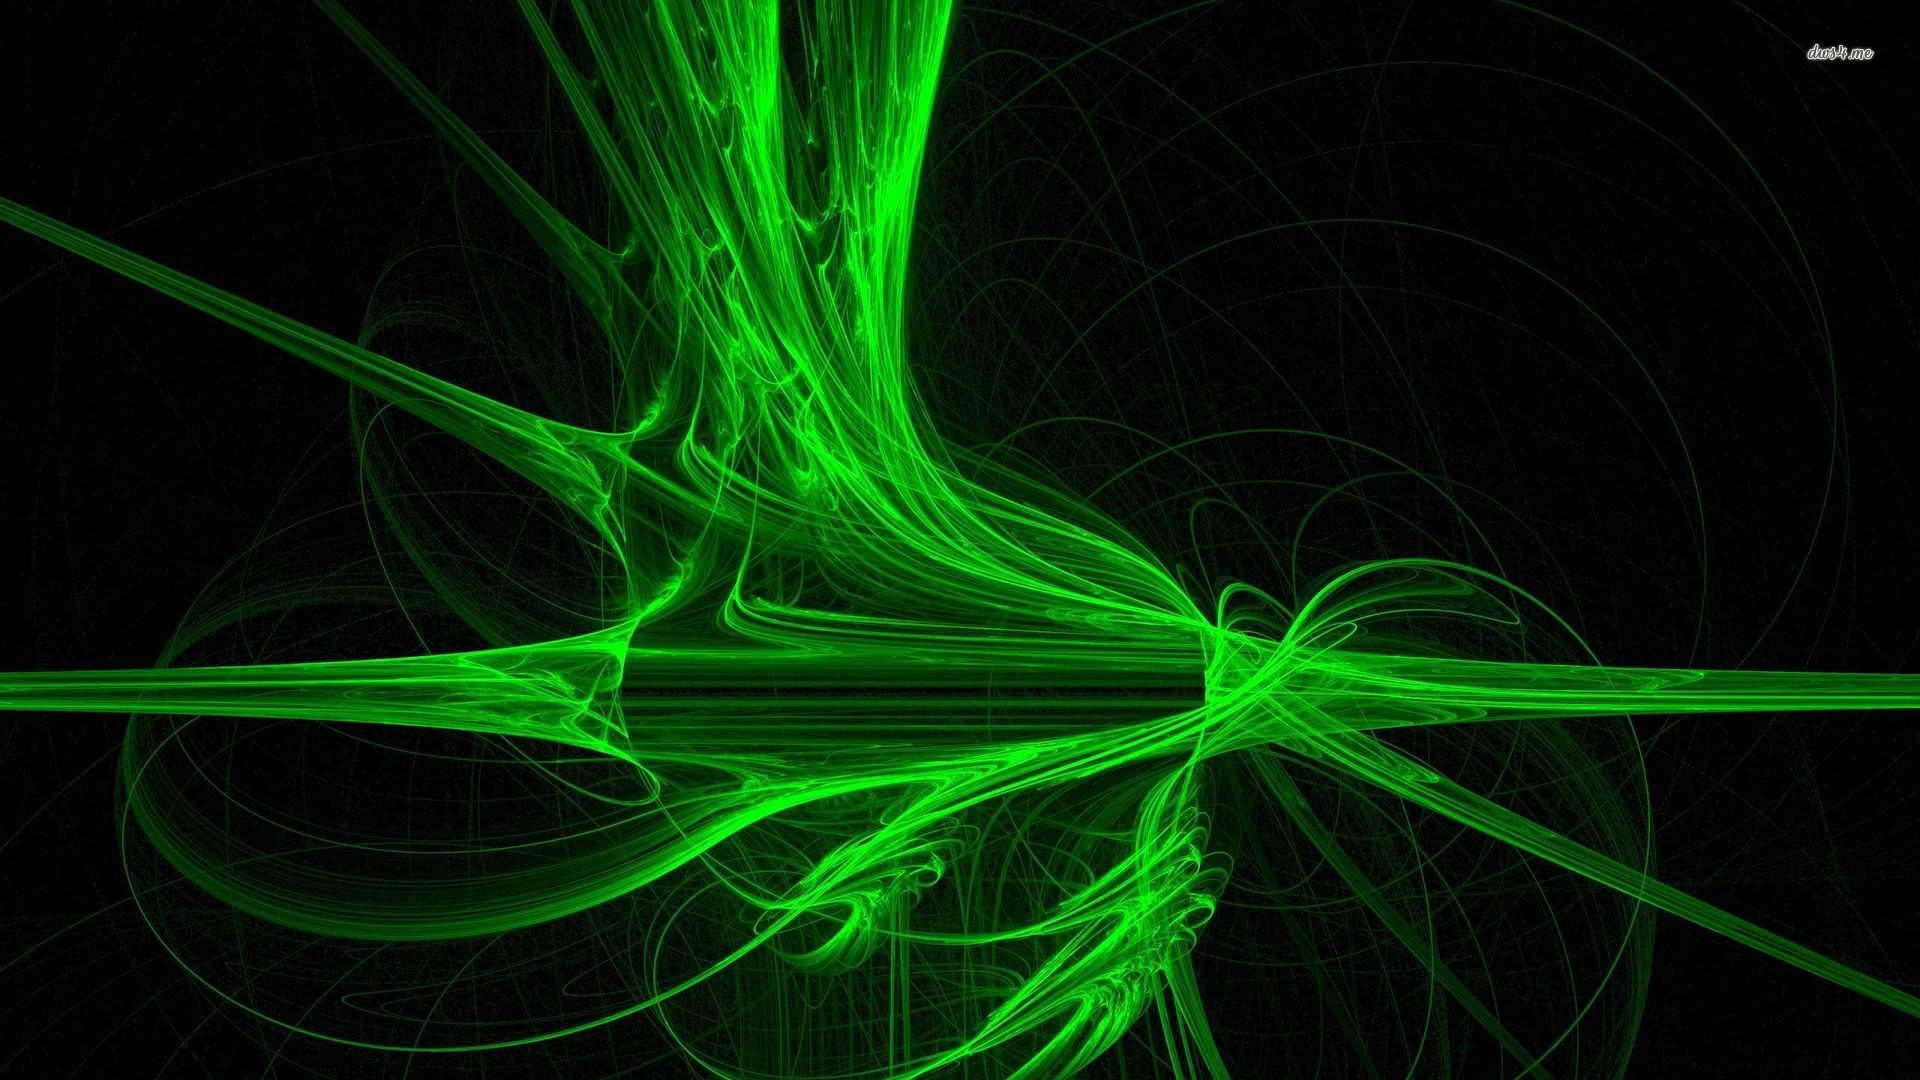 1920x1080 wallpaper-27284-neon-green-fibers--abstract .